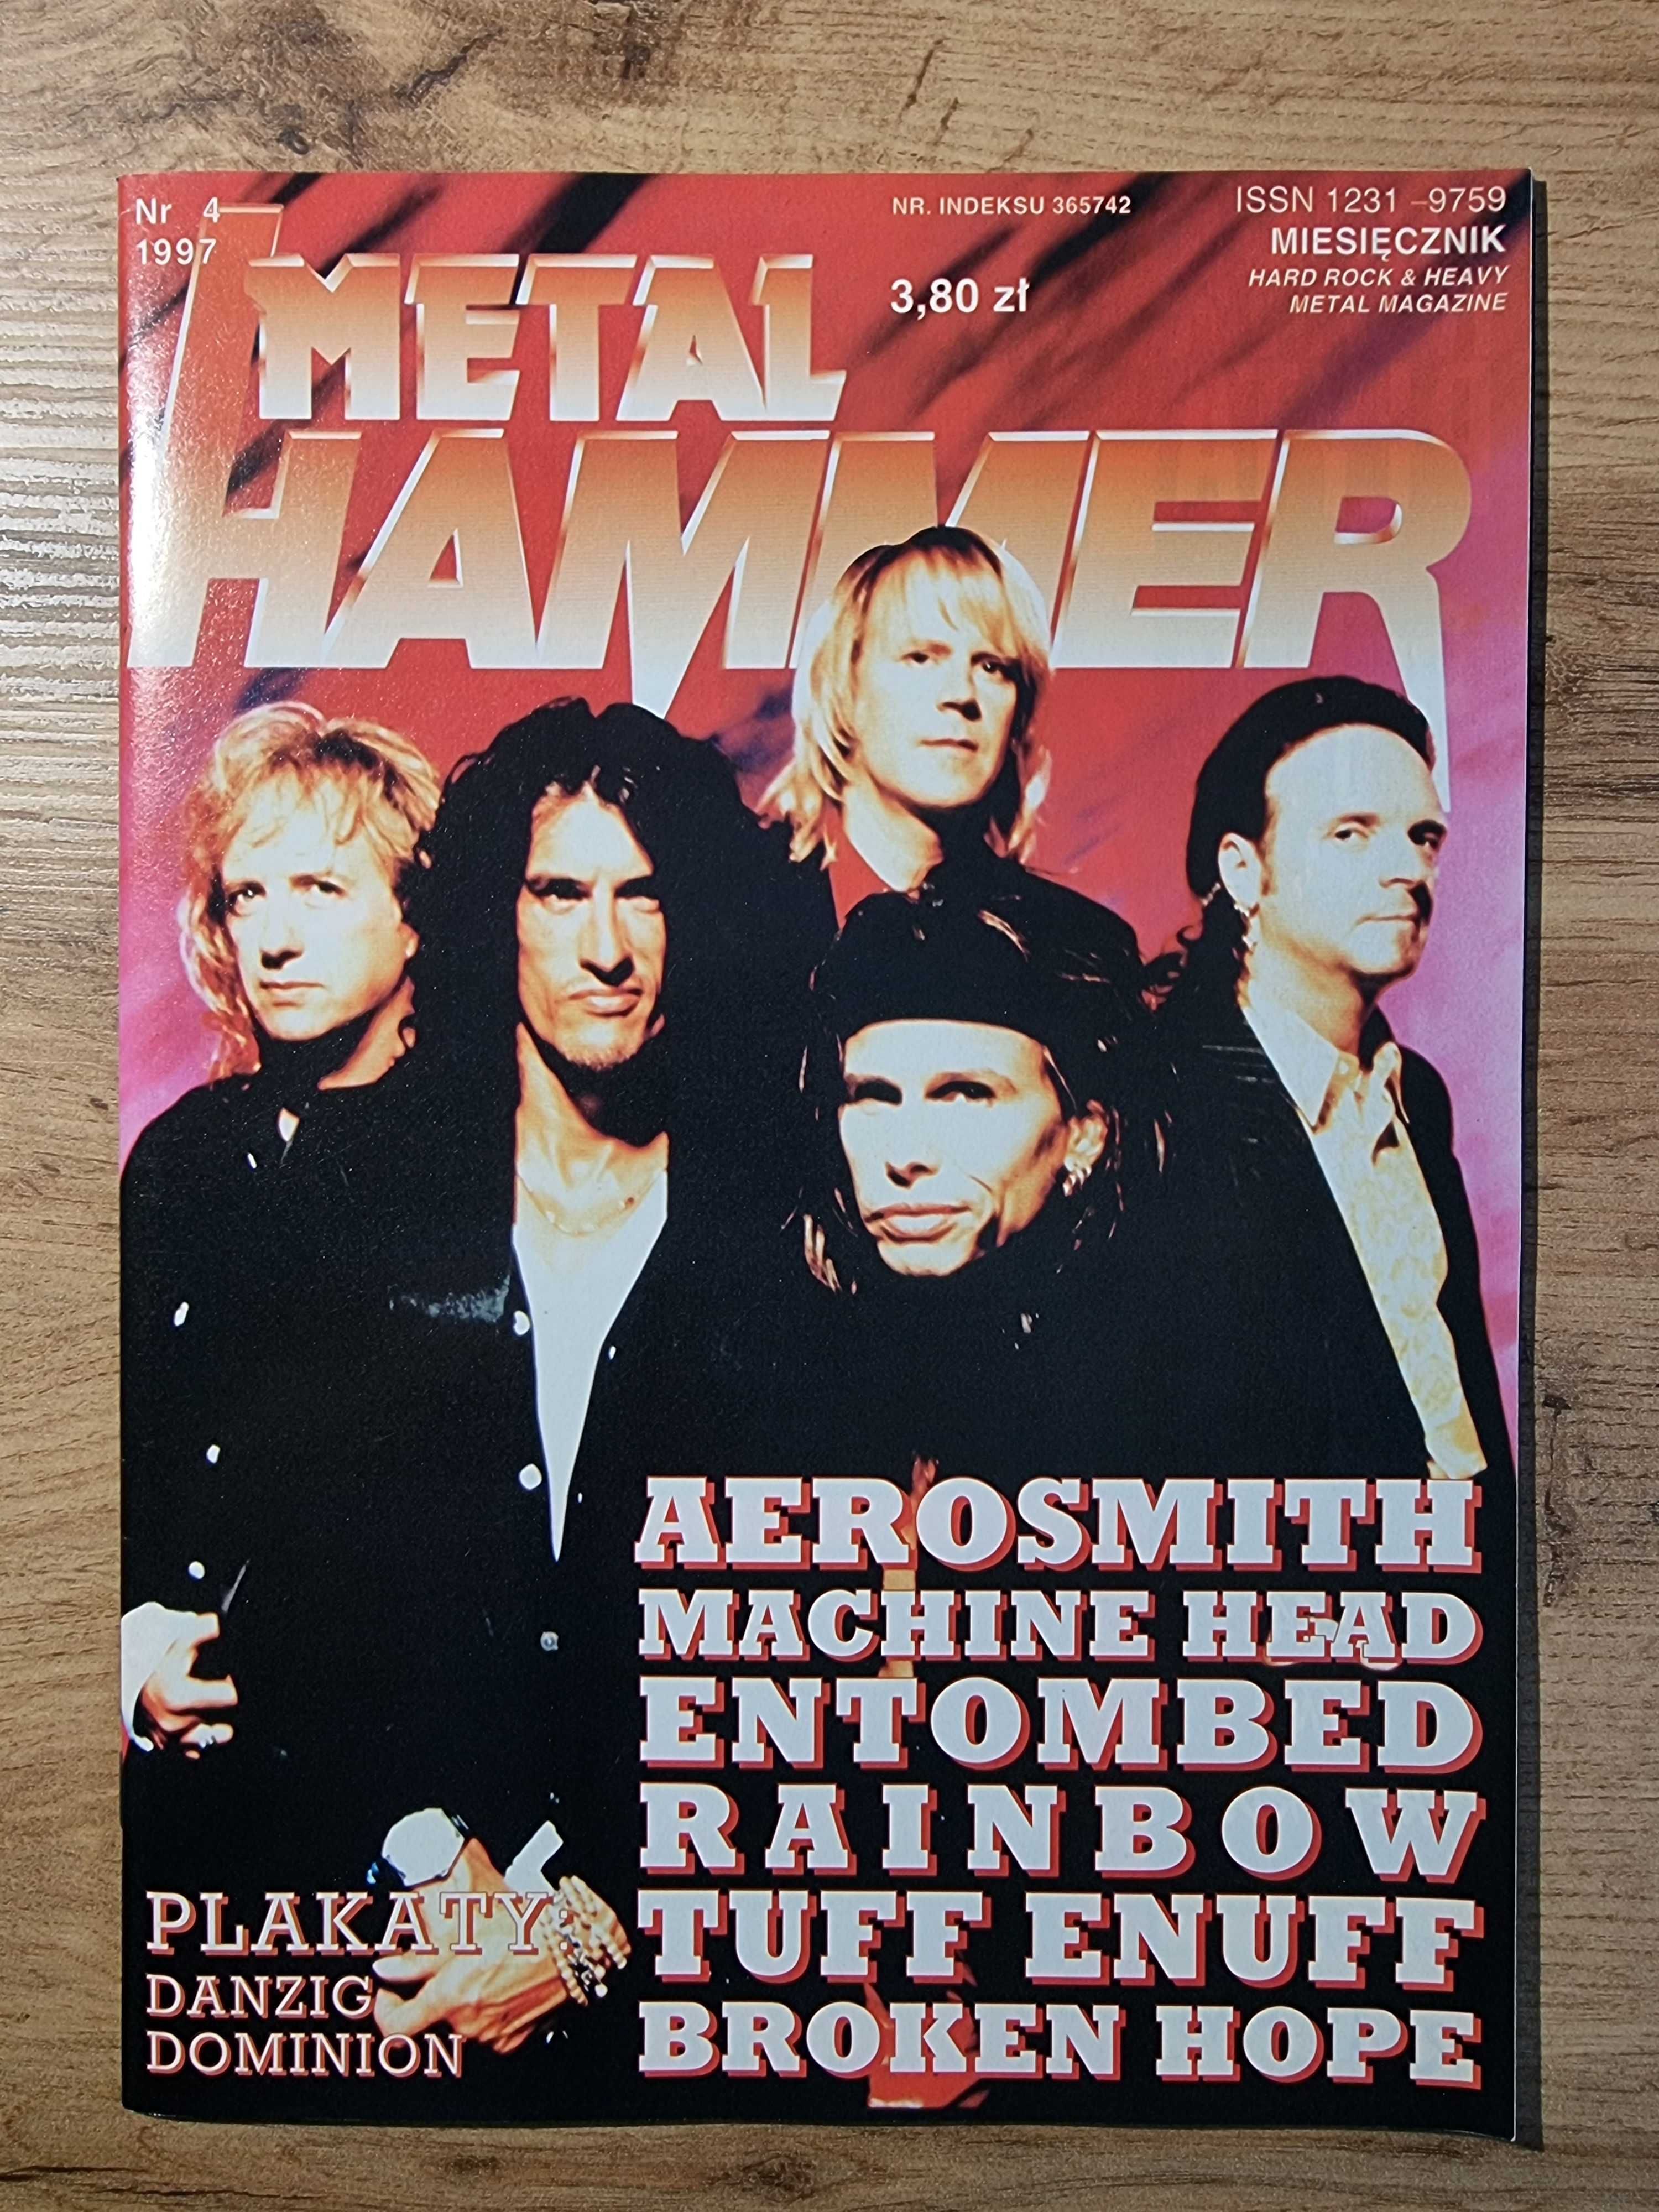 Metal Hammer 1997 - Aerosmith, Plakaty: Danzig, Dominion